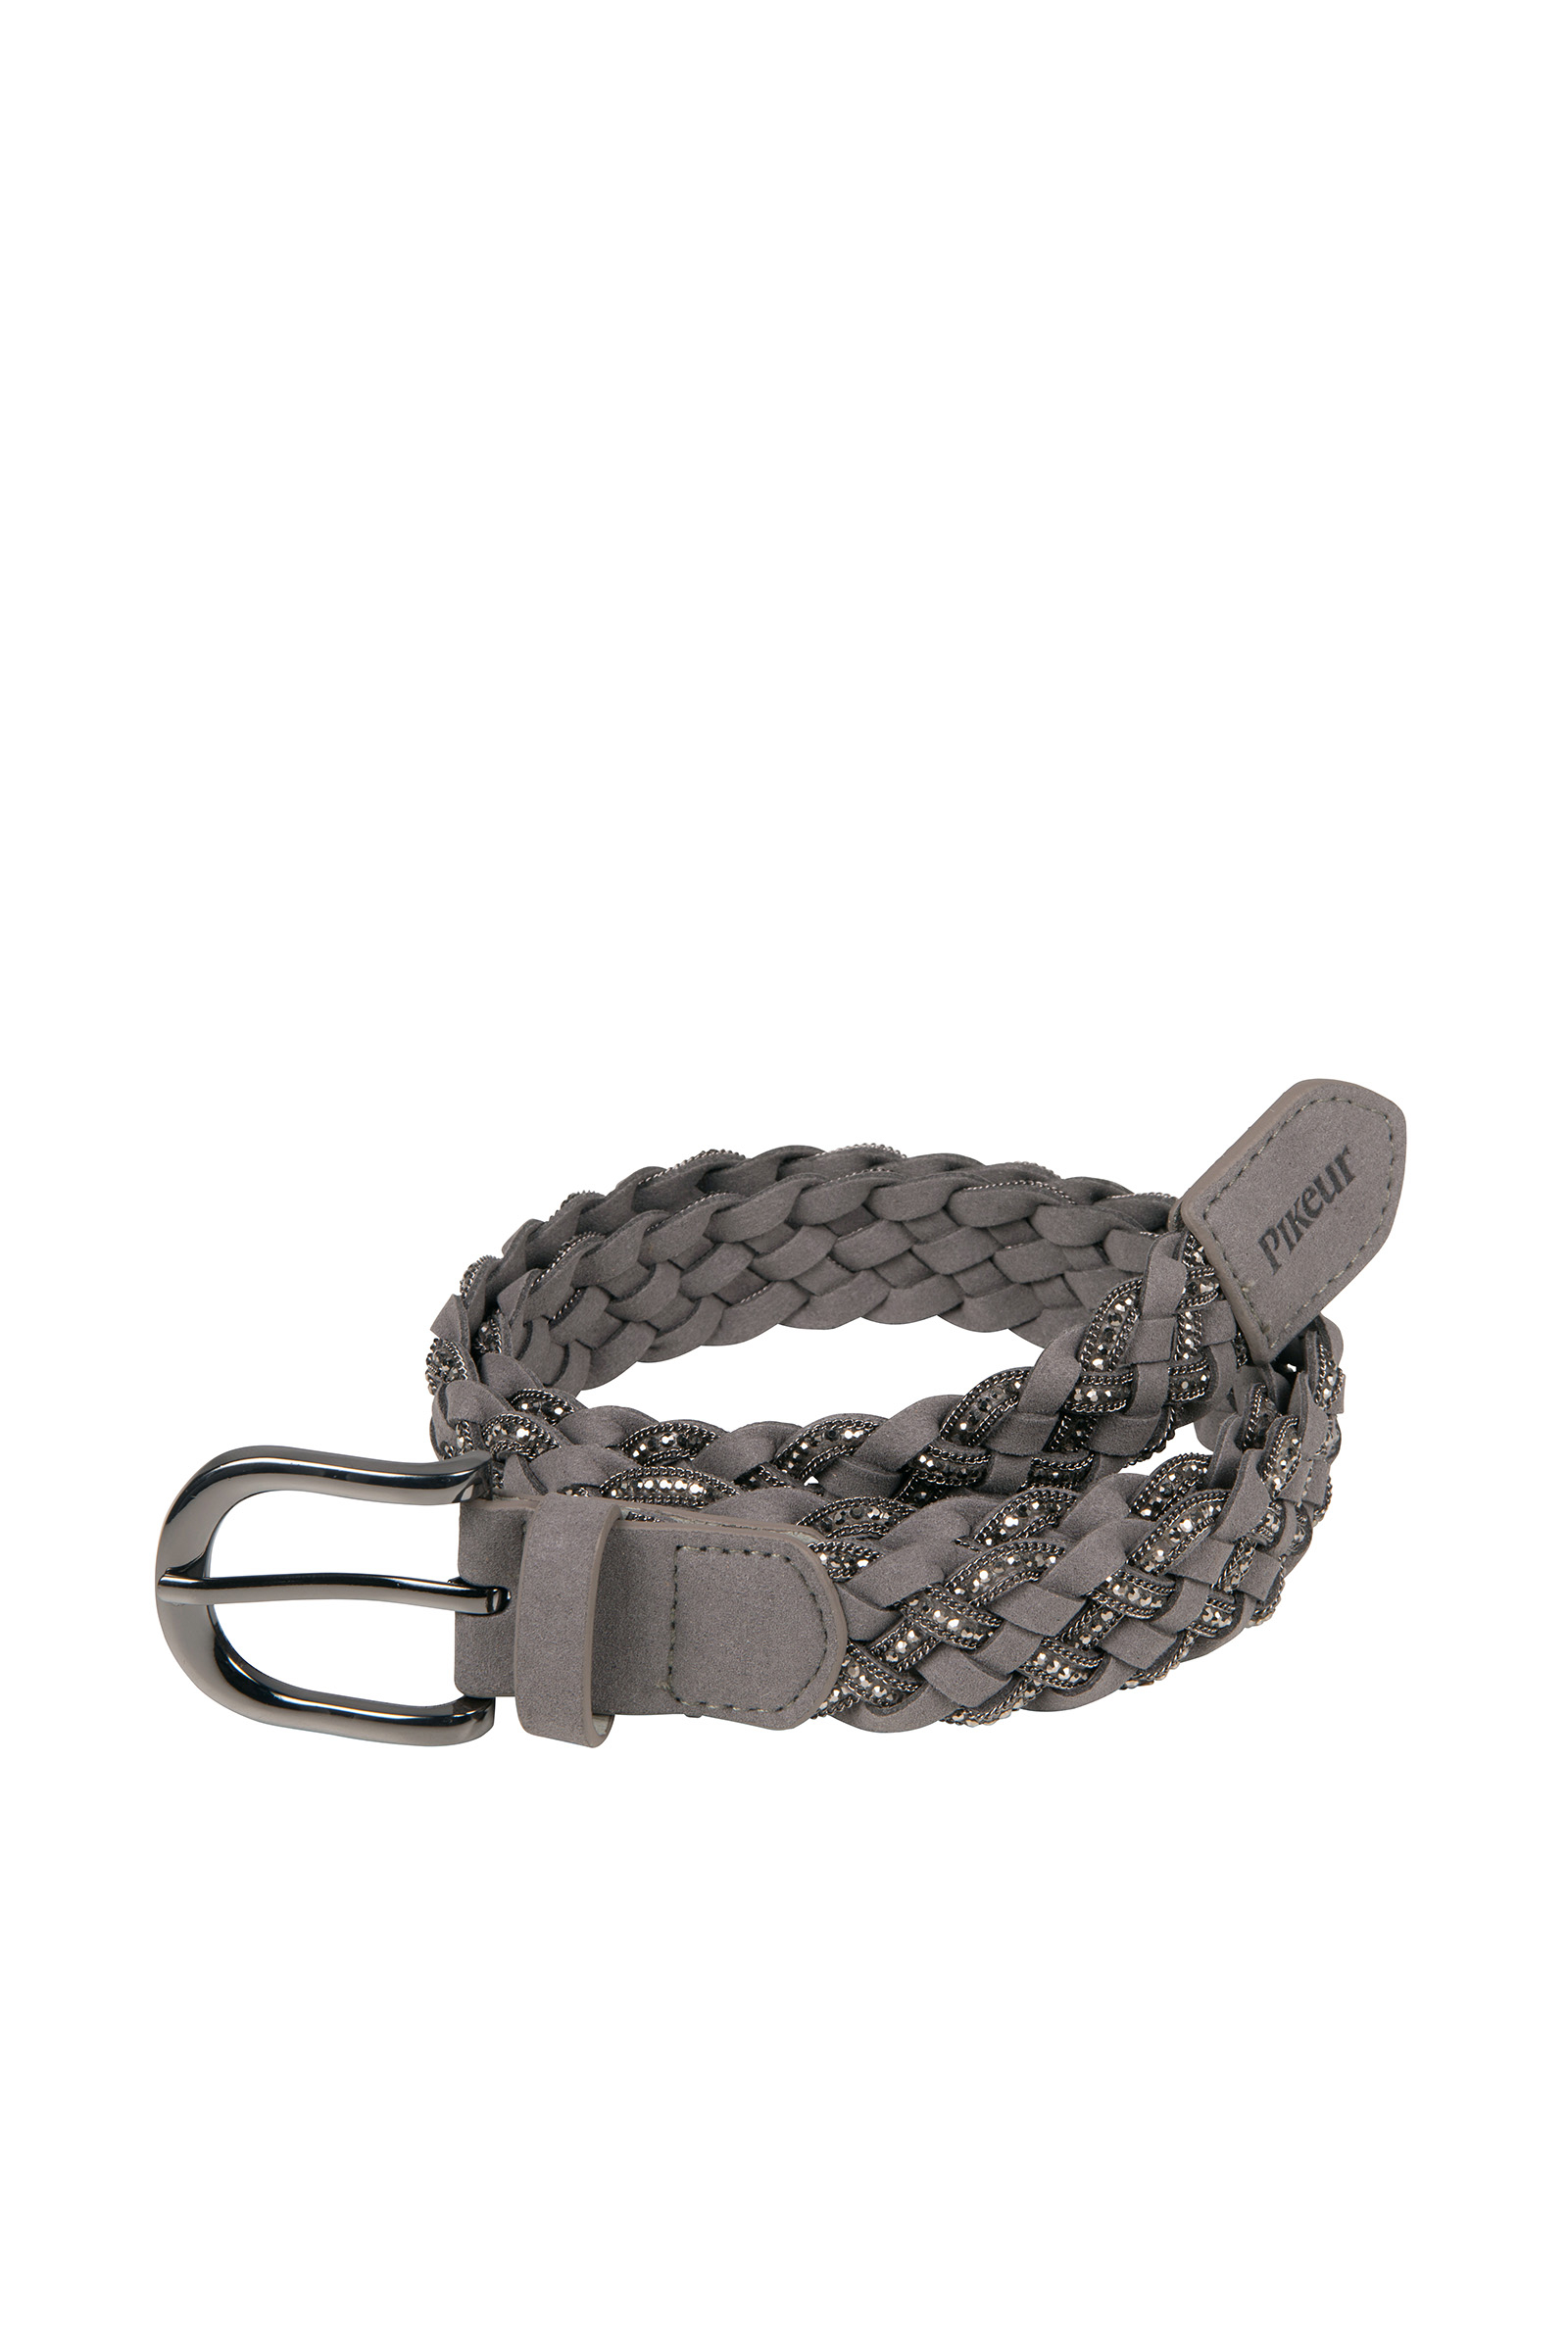 LeMieux Monogram Leather Belt